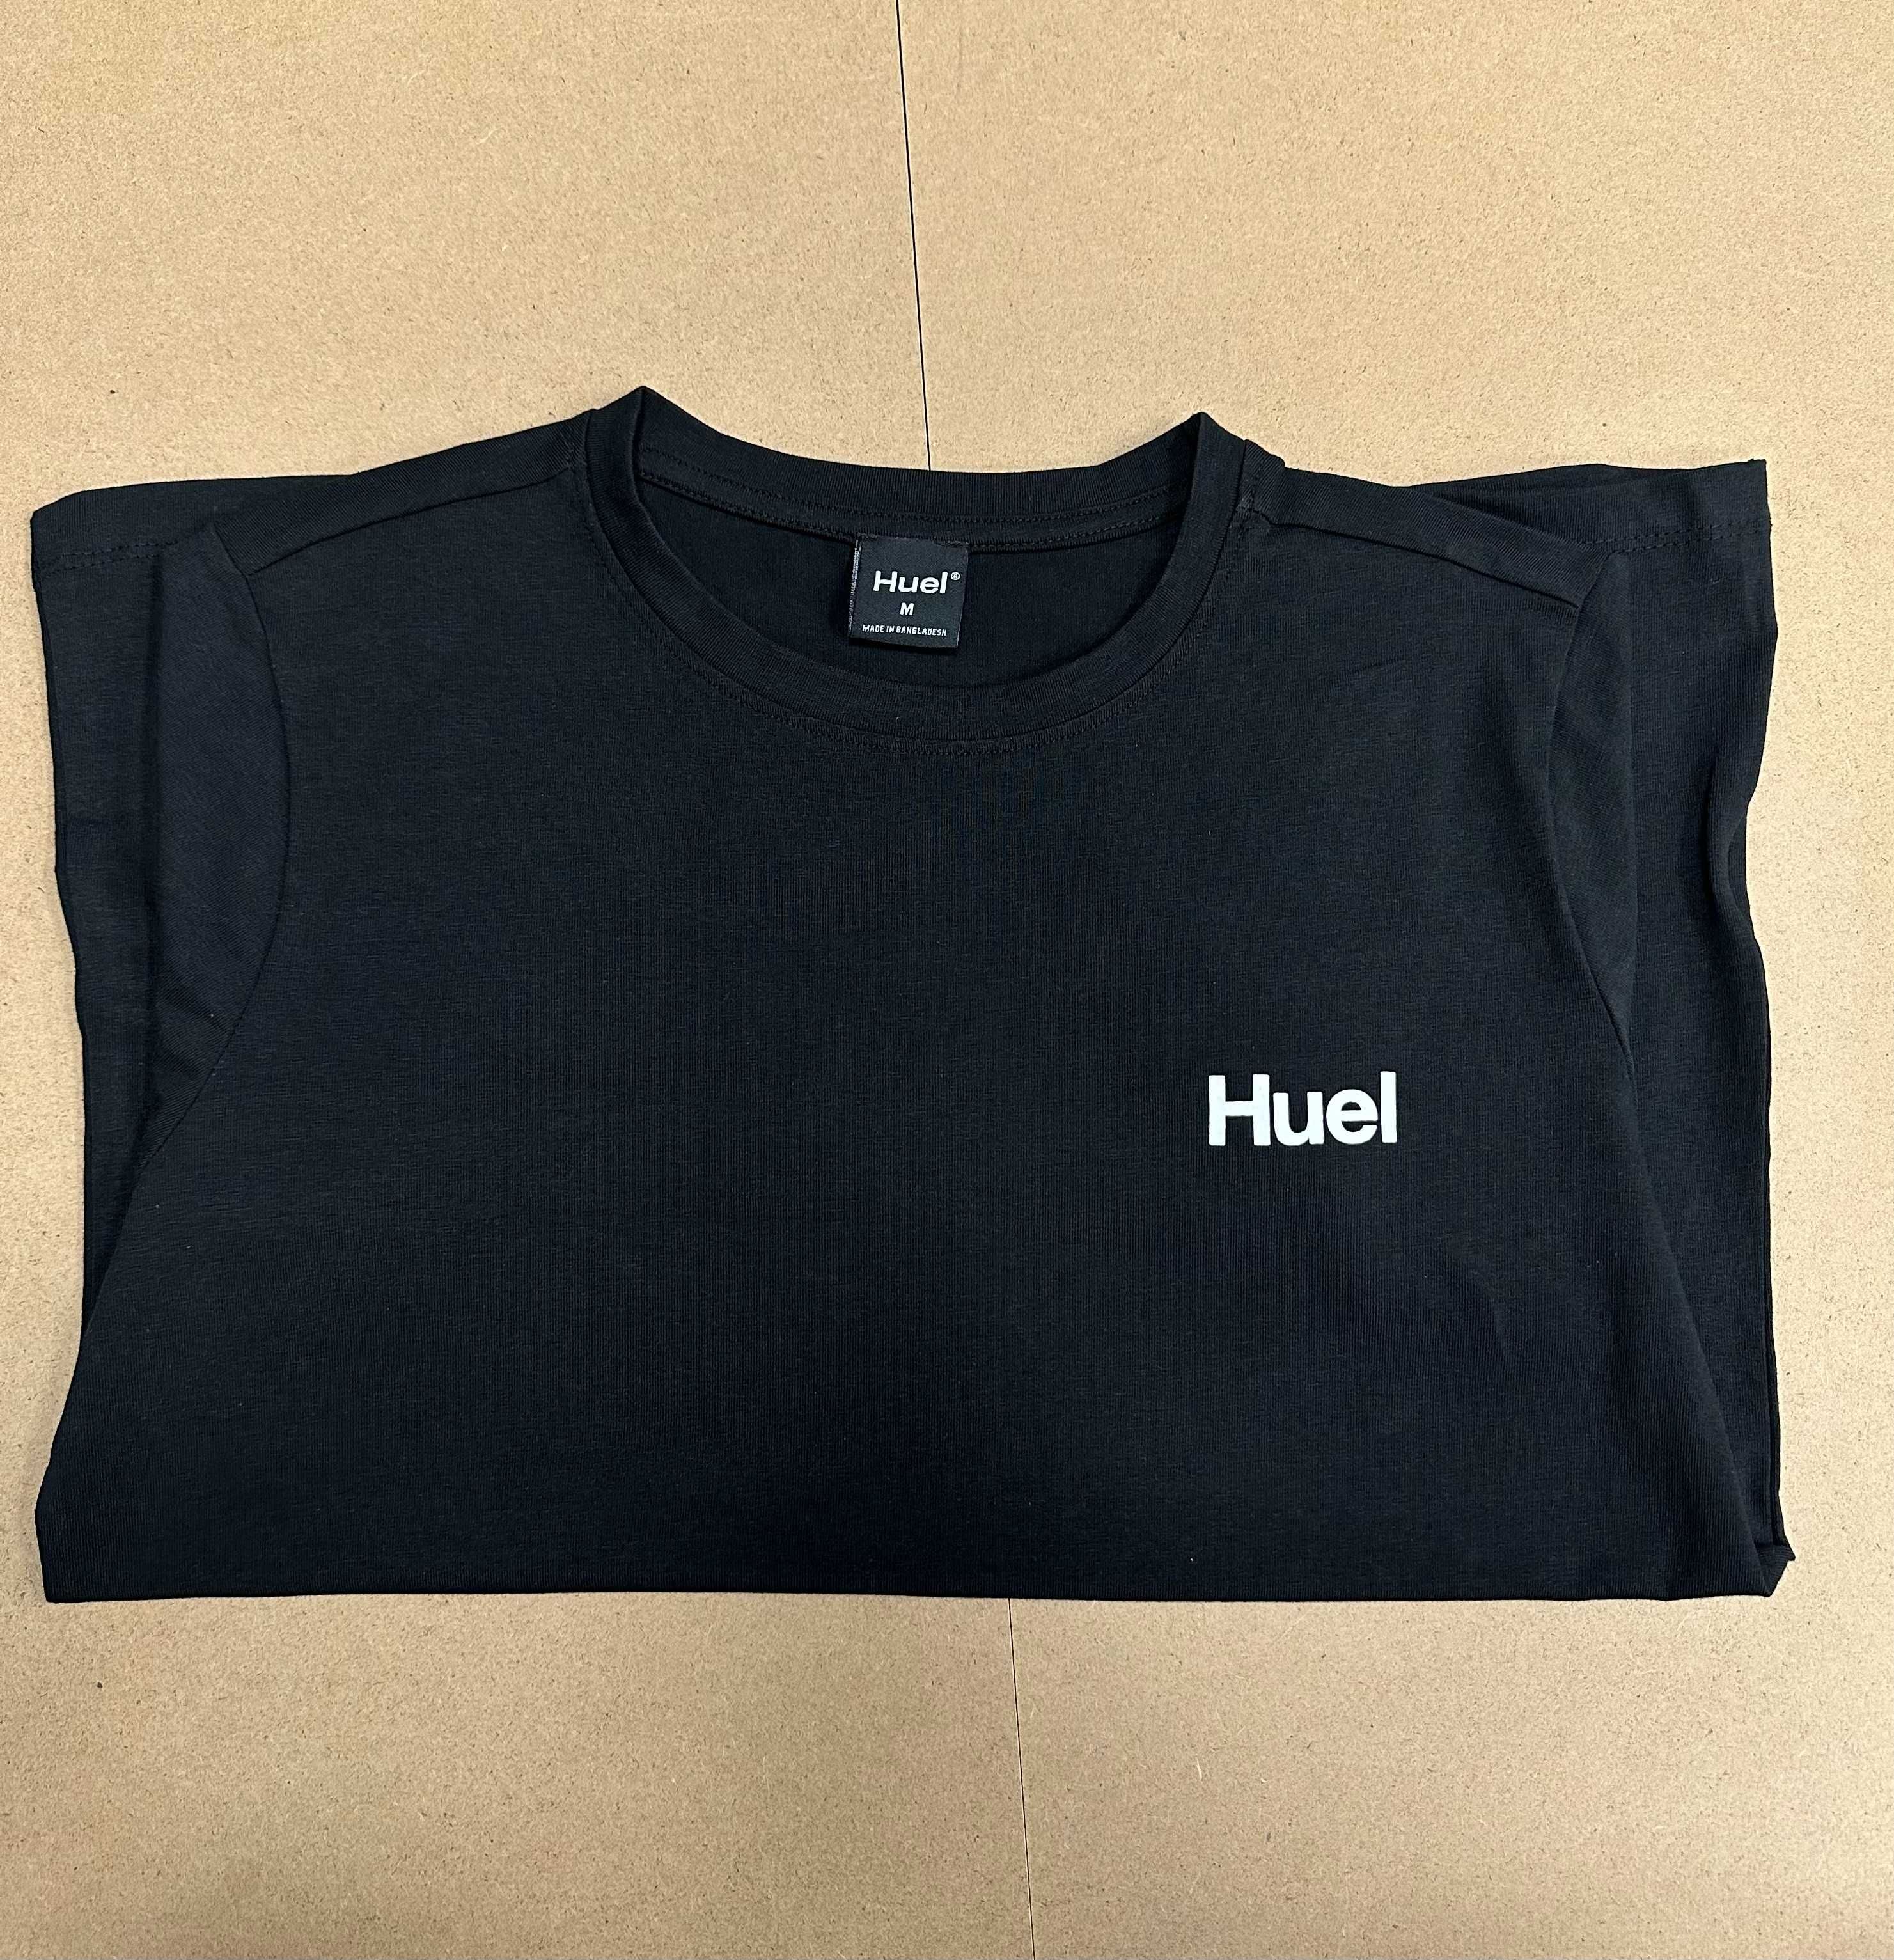 Koszulka damska T-Shirt damski Huel rozmiar S/M/L/XL czarna 2 sztuki